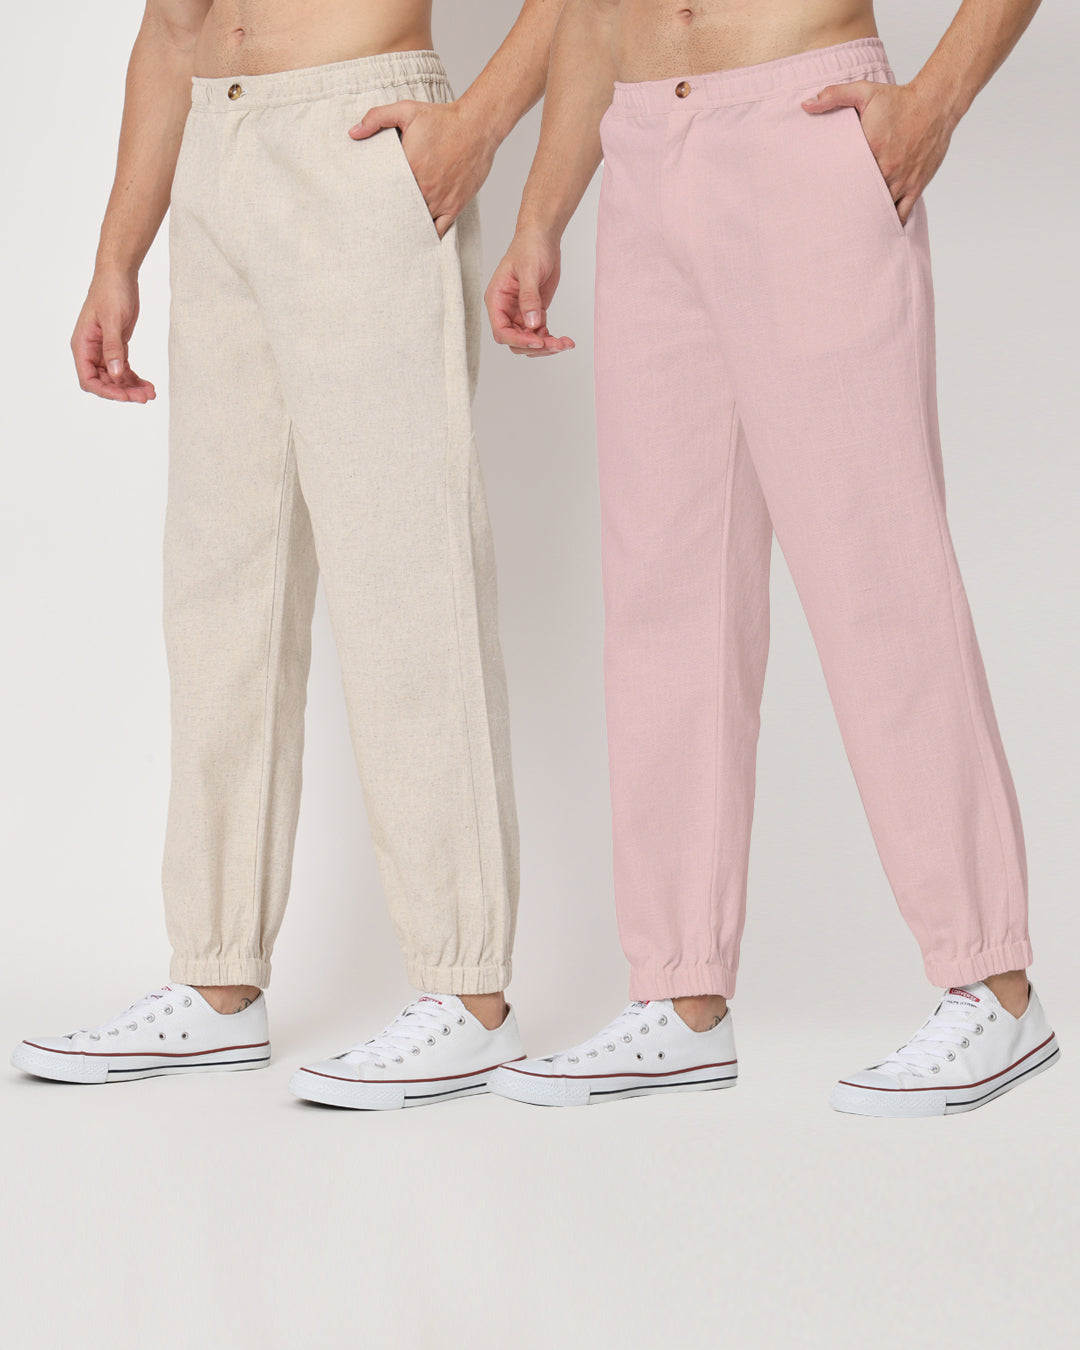 Combo: Beige & Fondant Pink Jog Men's Pants - Set of 2